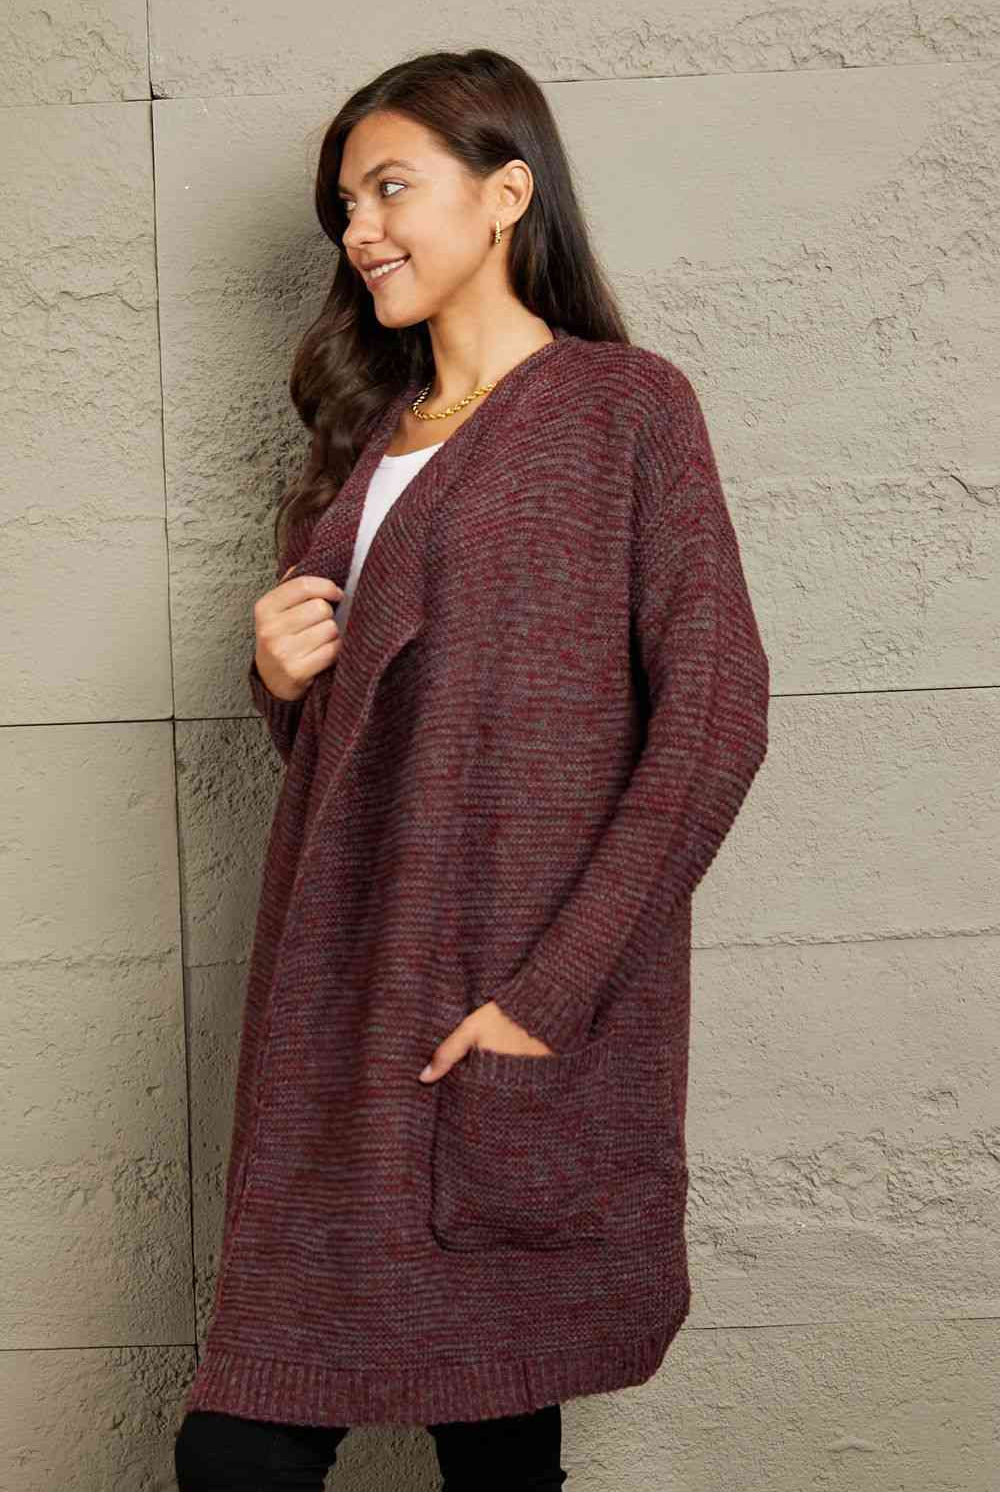 e.Luna Knit Sweater Cardigan - GemThreads Boutique